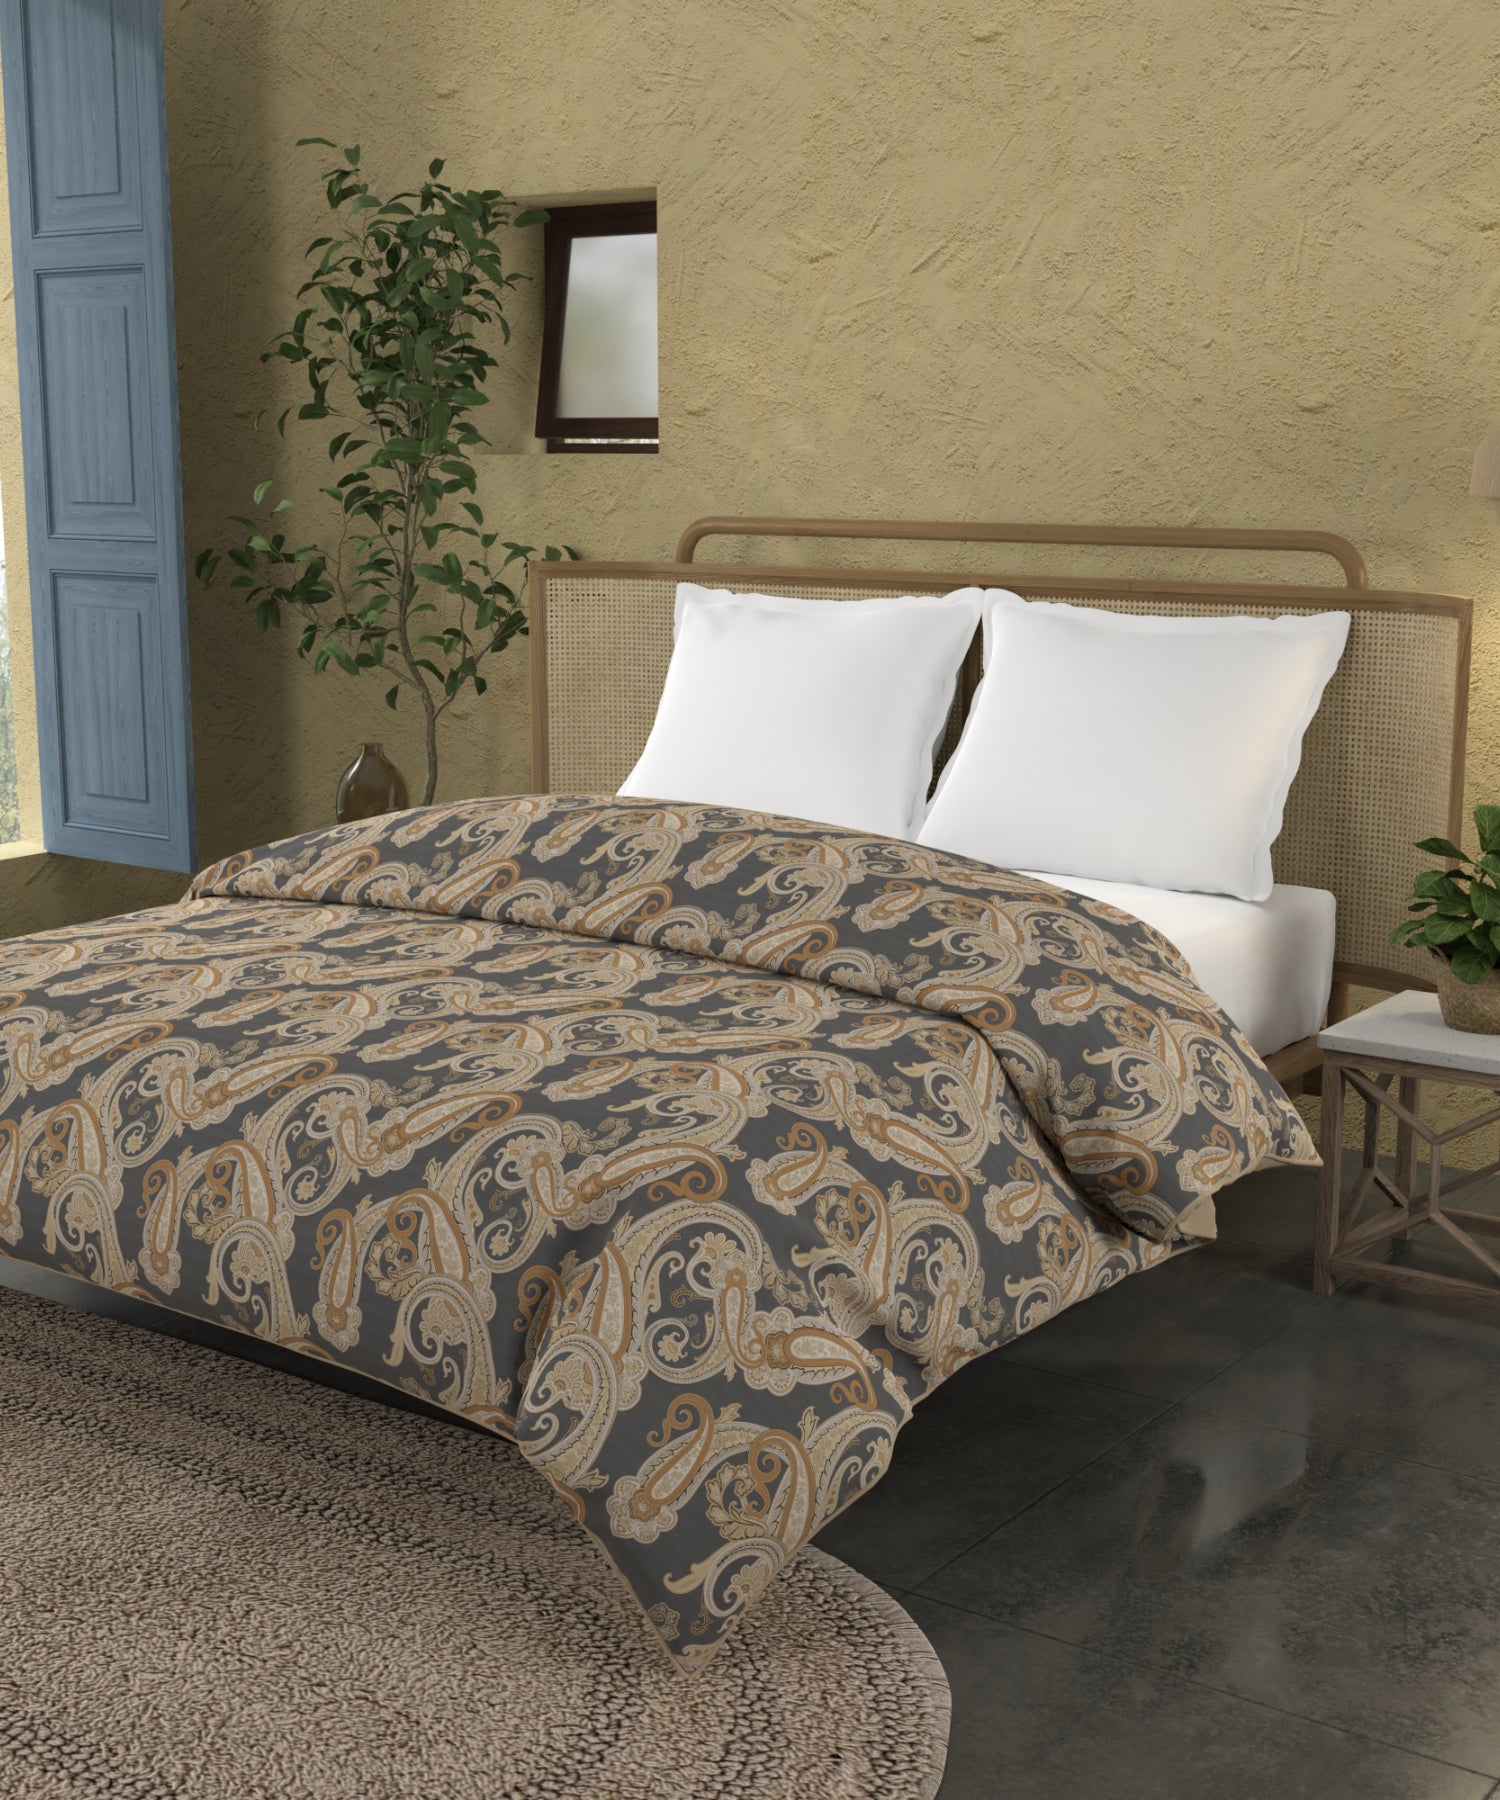 King Size Comforter ₹3599/-